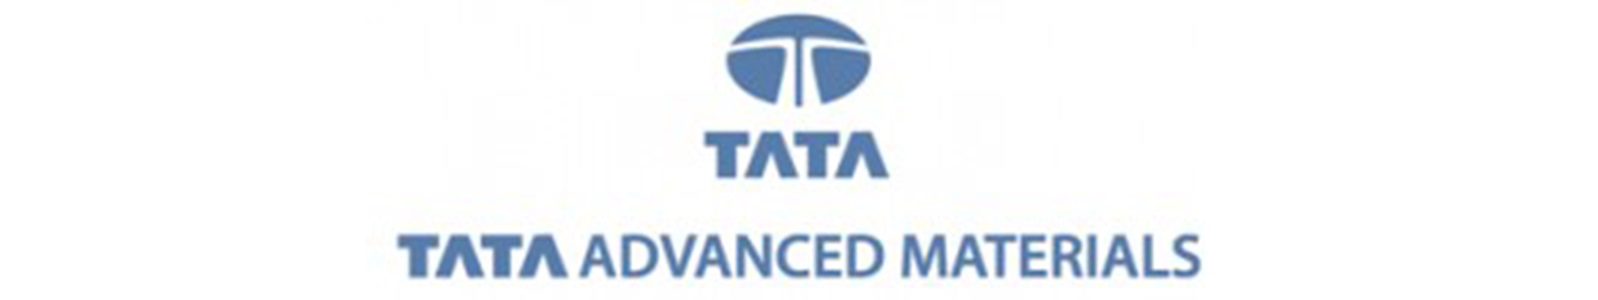 tata-advanced-materials